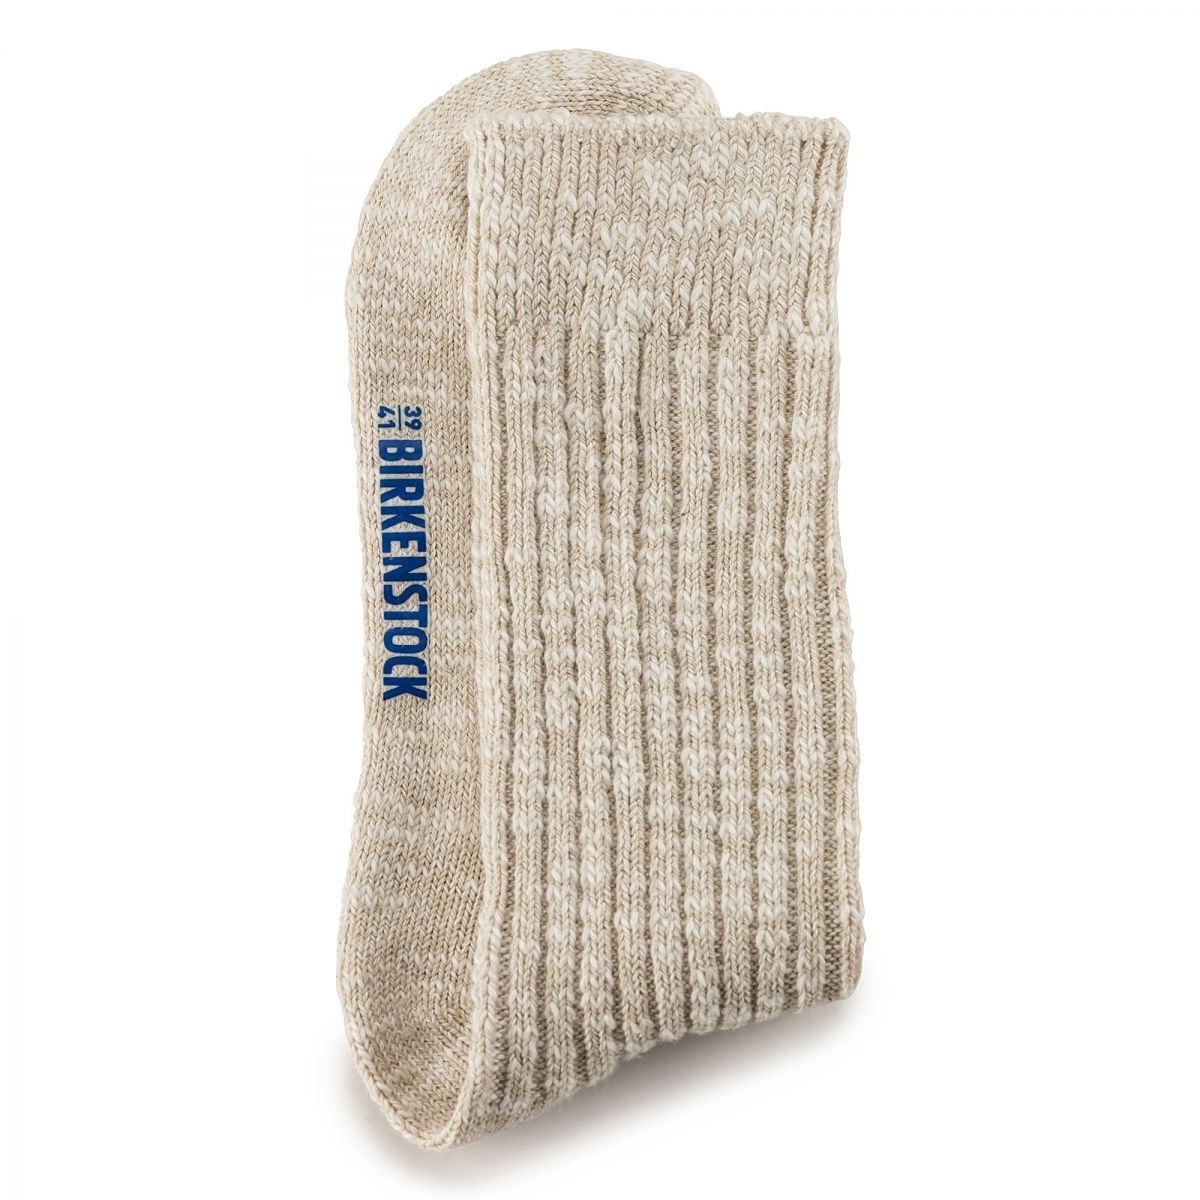 BIRKENSTOCK Men's Cotton Slub Socks Beige - 1008061 BEIGE - BEIGE, 42 M EU